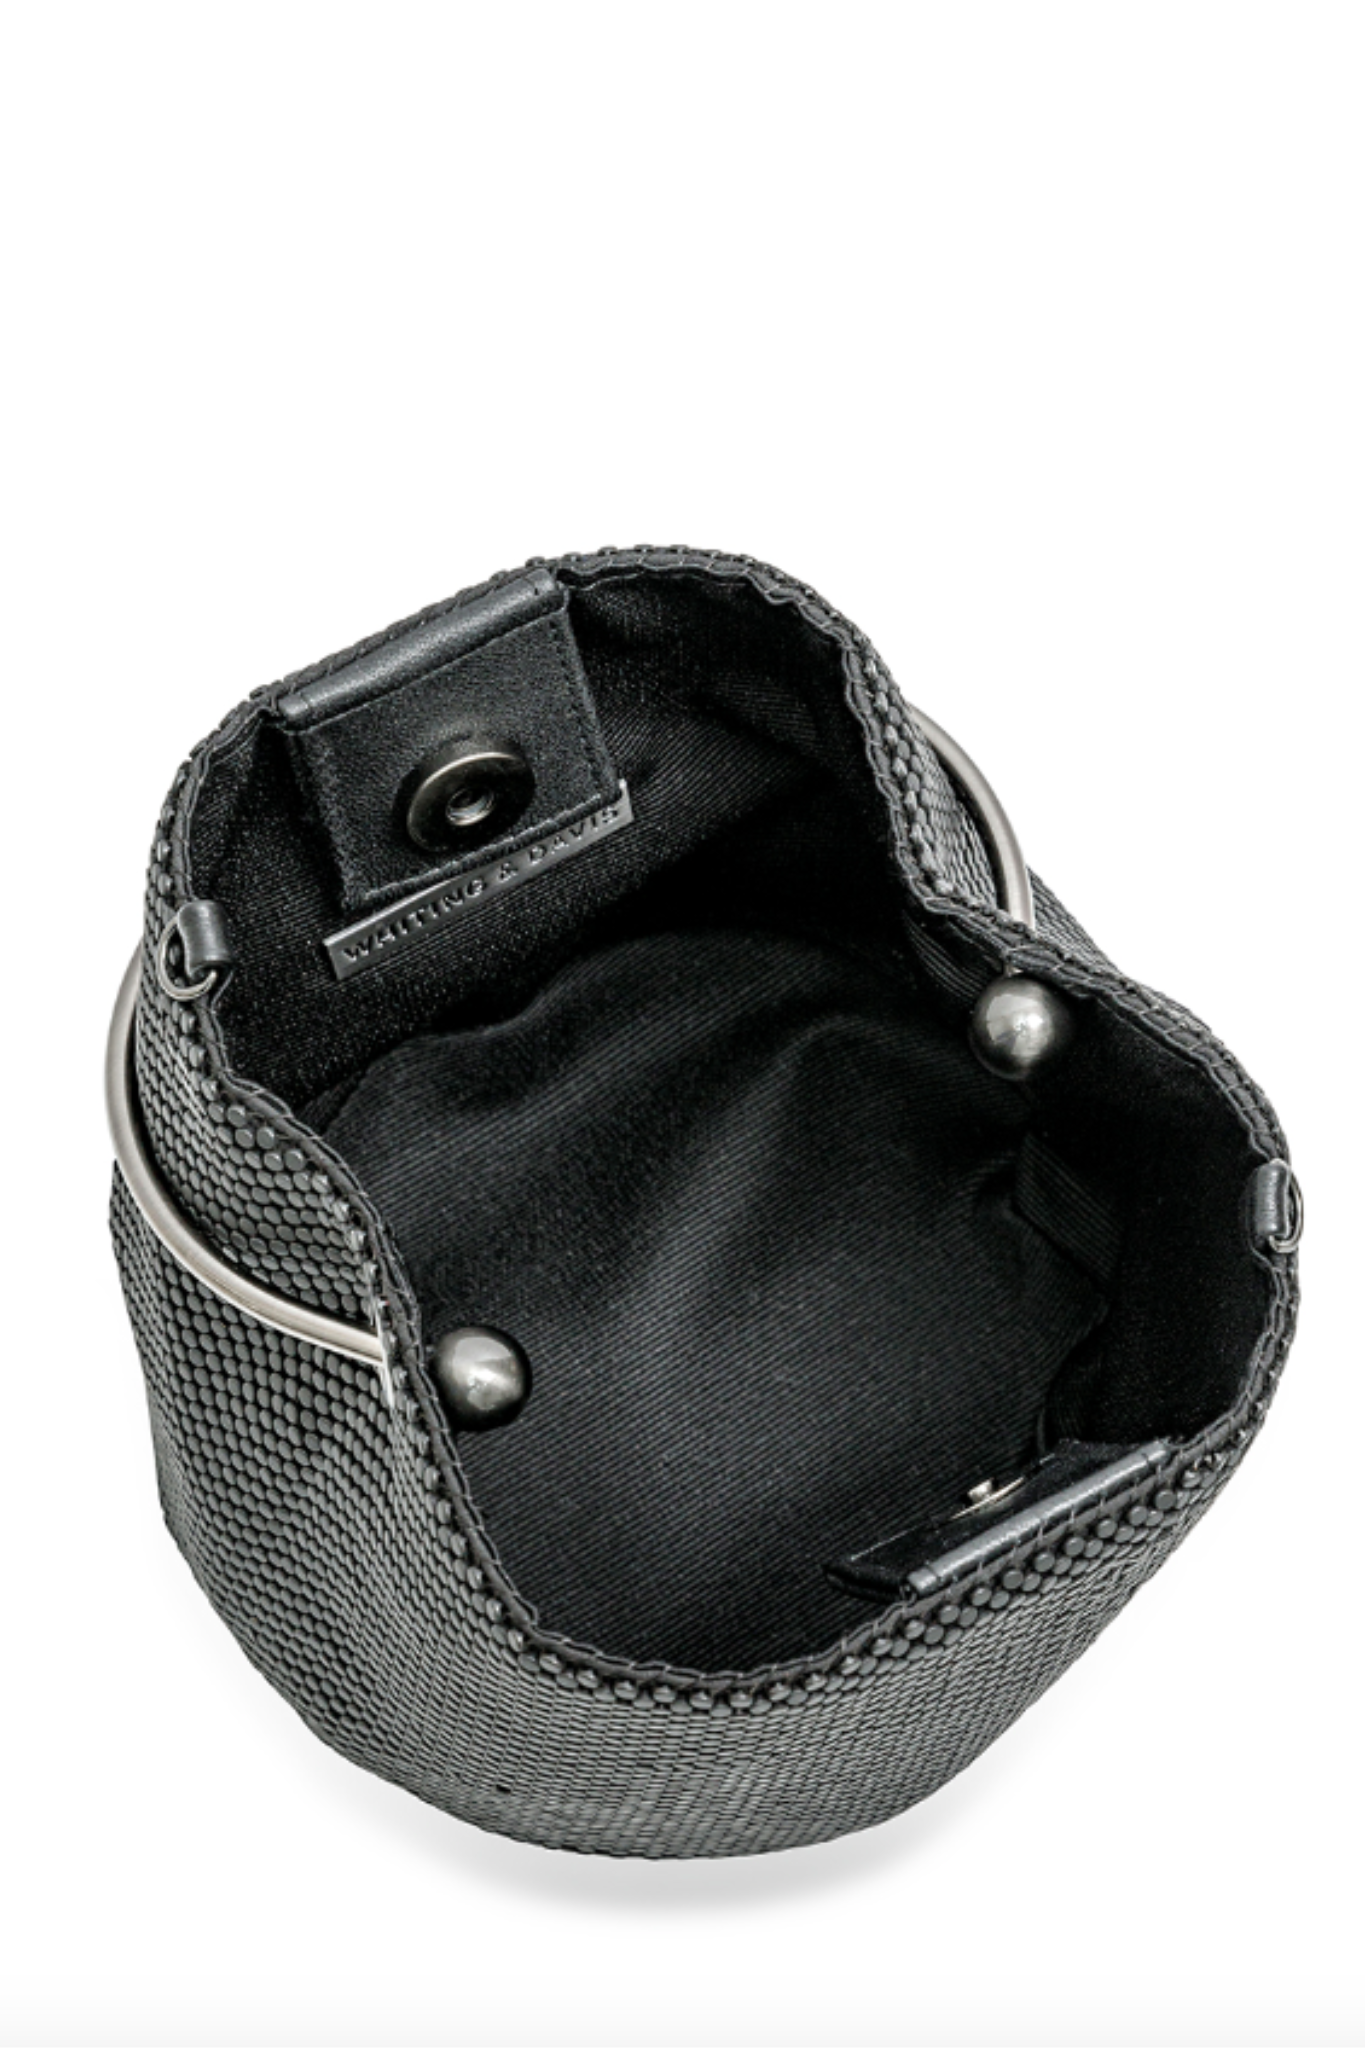 Crescent Bracelet Bag in Black by Whiting and Davis - RENTAL